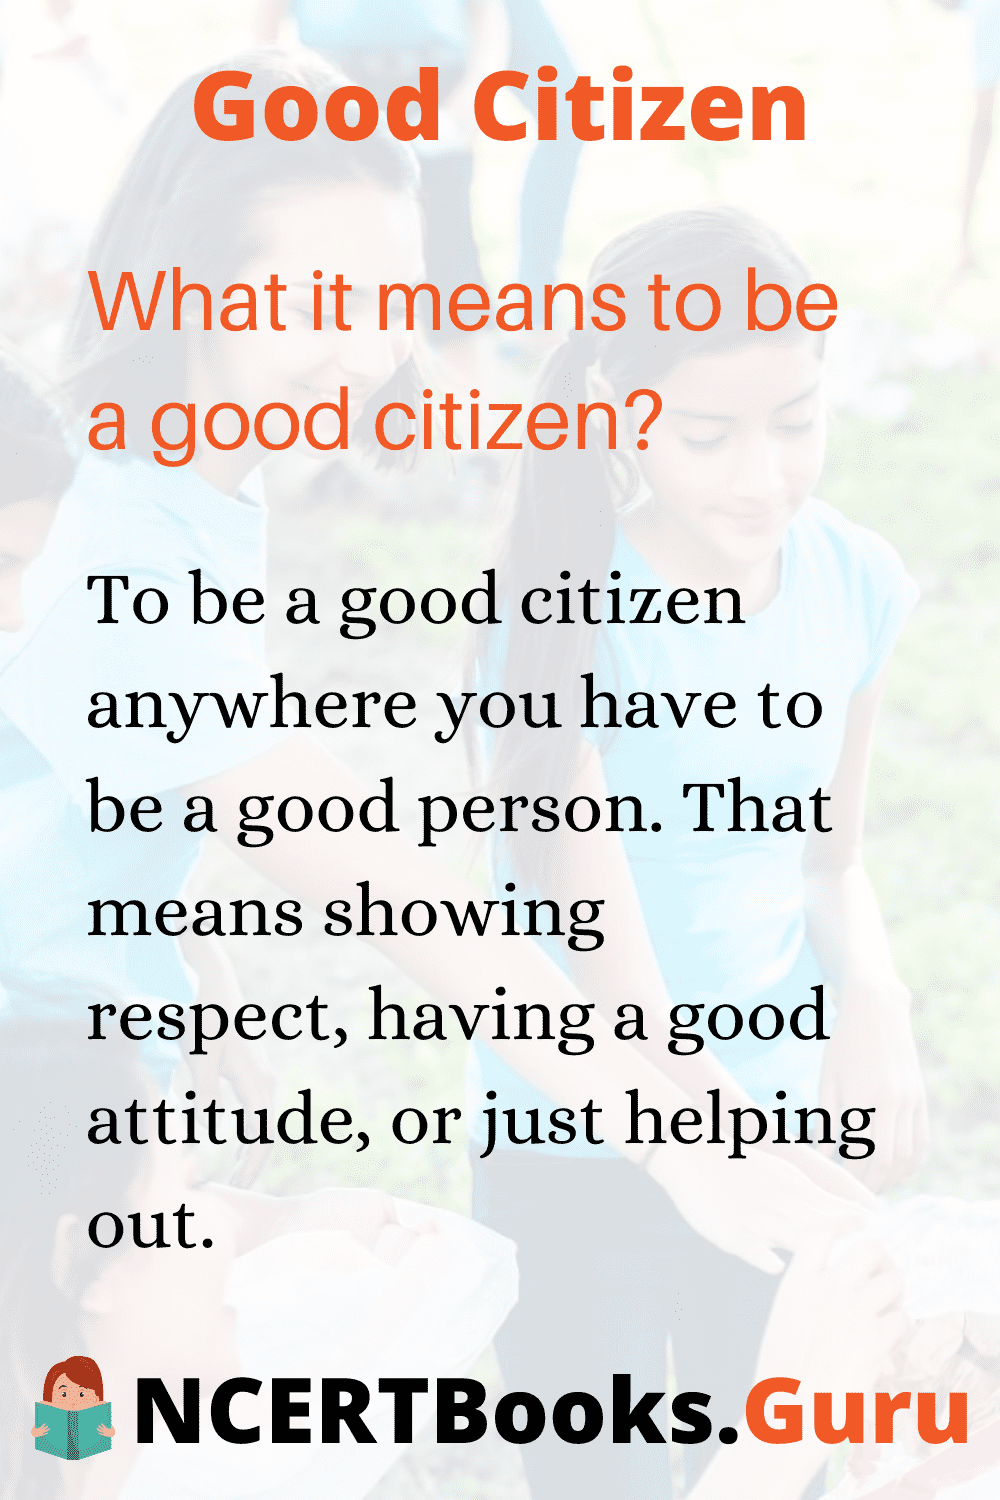 Qualities of Good Citizen